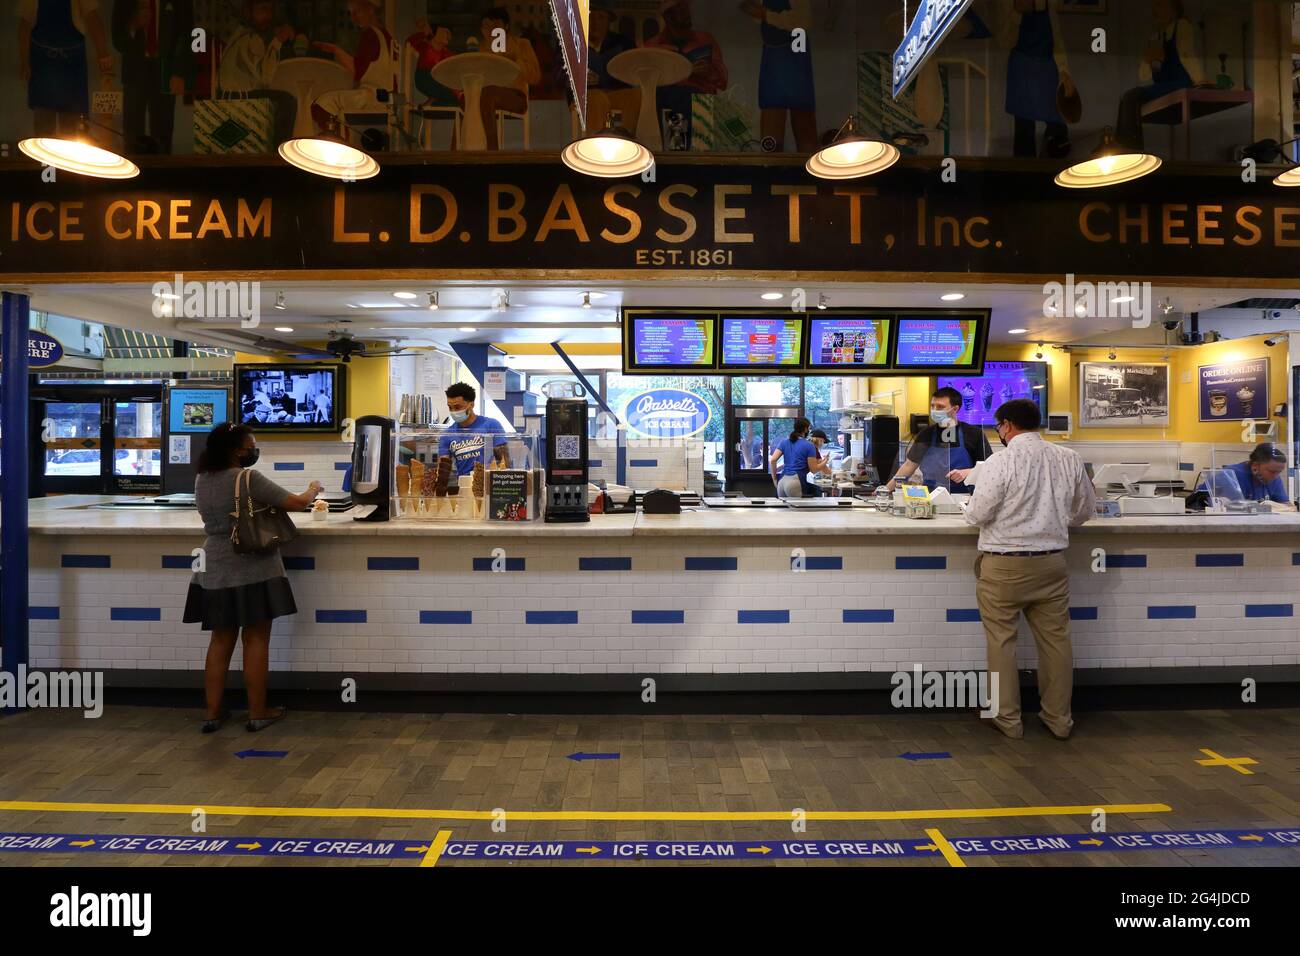 Bassetts Ice Cream im Reading Terminal Market, Philadelphia, PA. Innenraum einer Eisdiele. Stockfoto